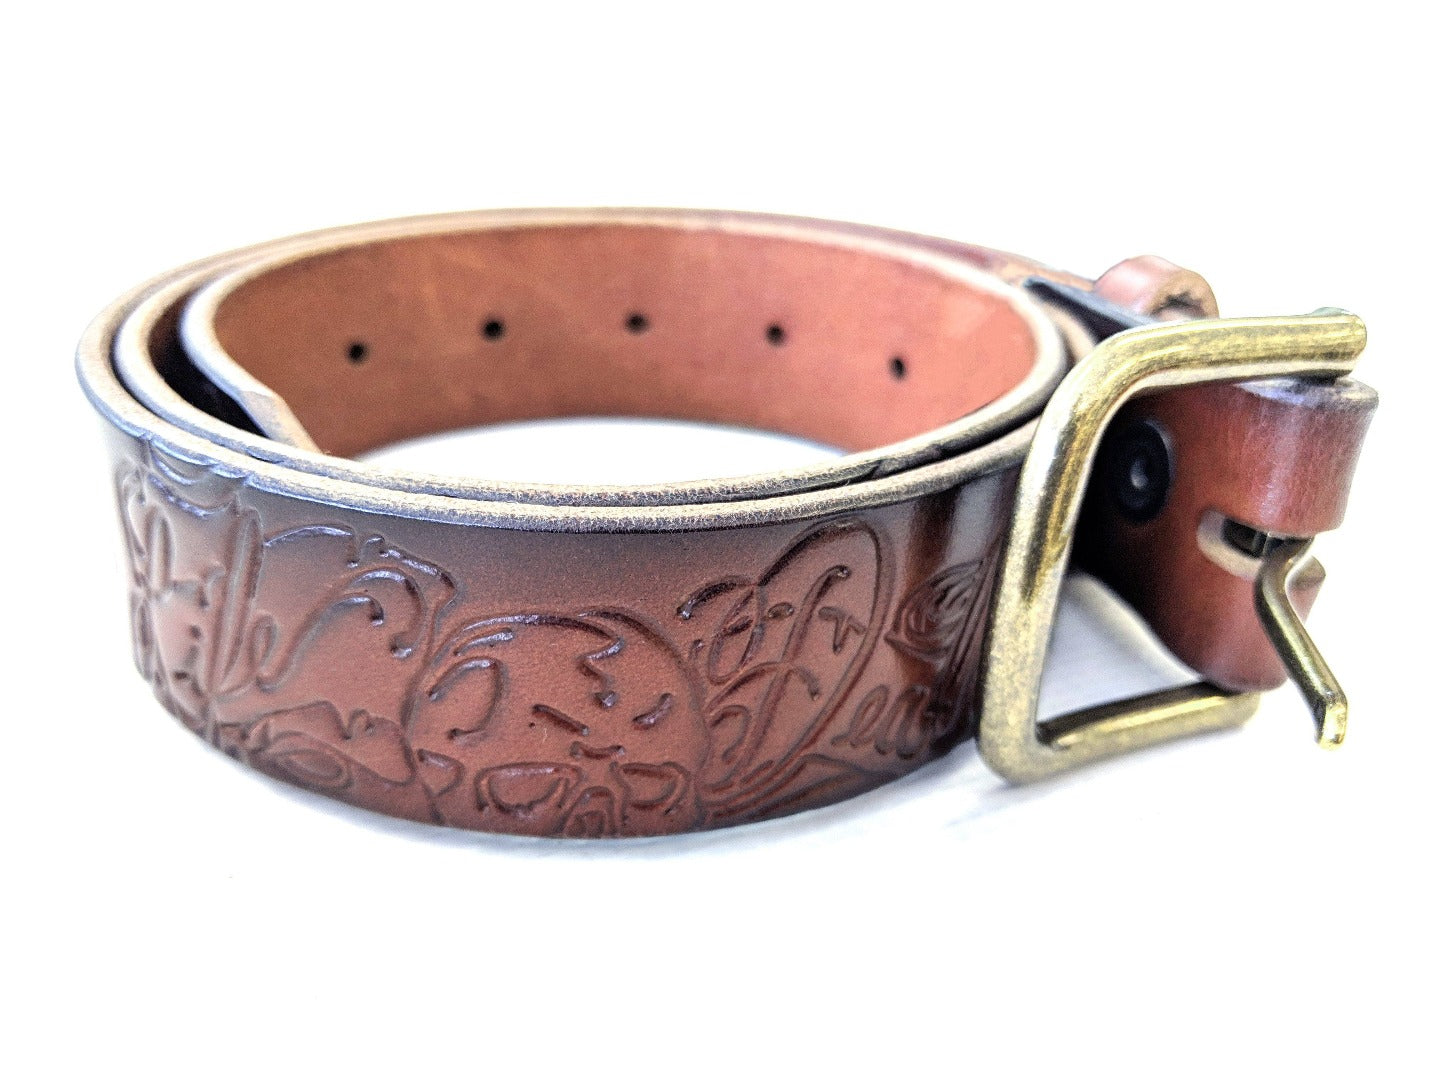 Anvil Signature Belt Charm Loop Wallet Chain Attachment - Bronze - Anvil  Customs